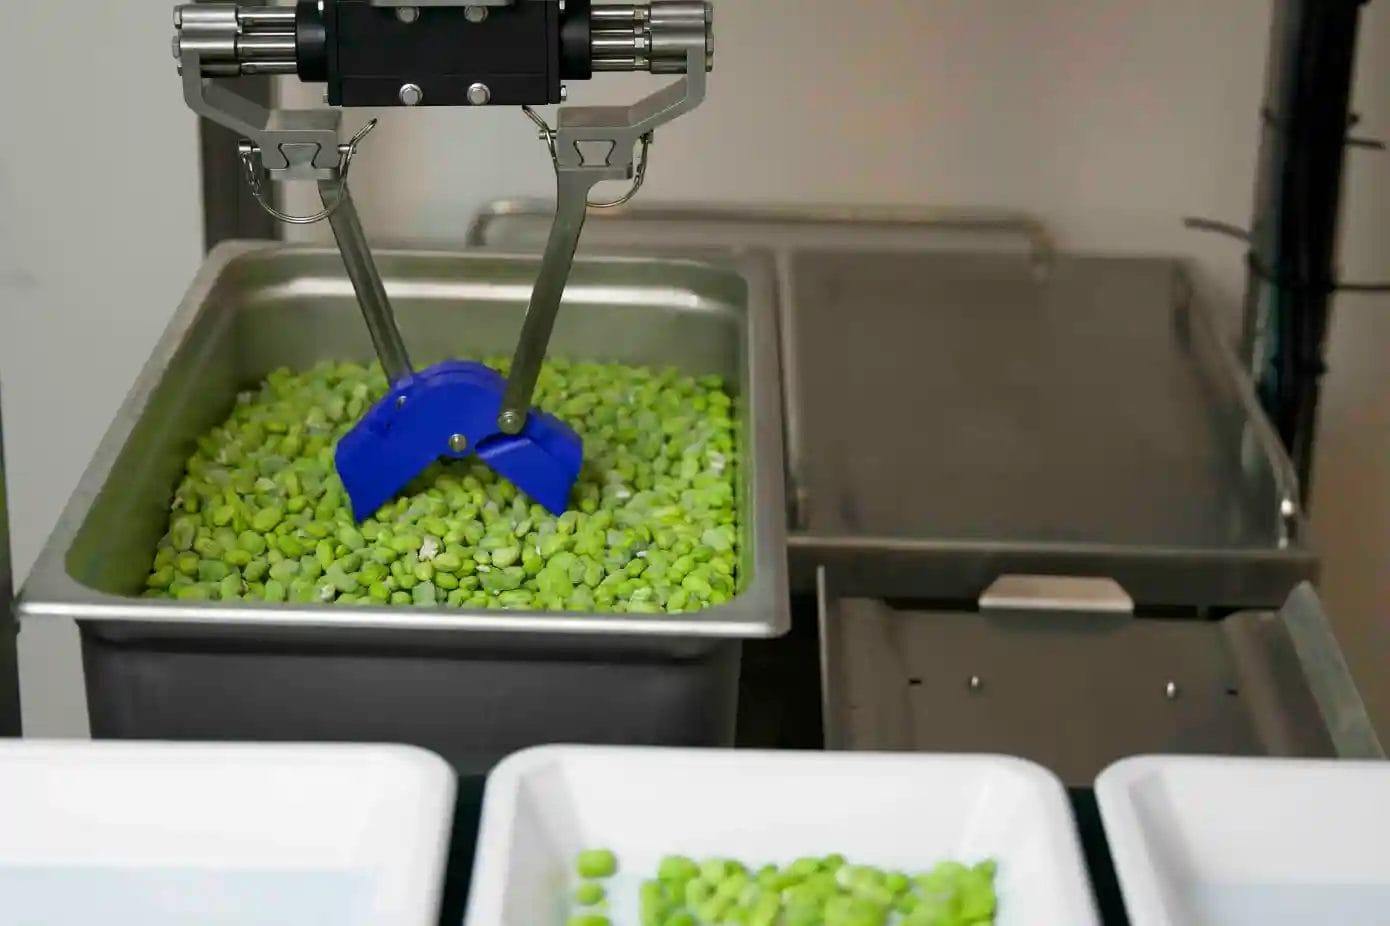 Market Leader Chef Robotics Surpasses 10M Meals in Production Using AI-Enabled Robots